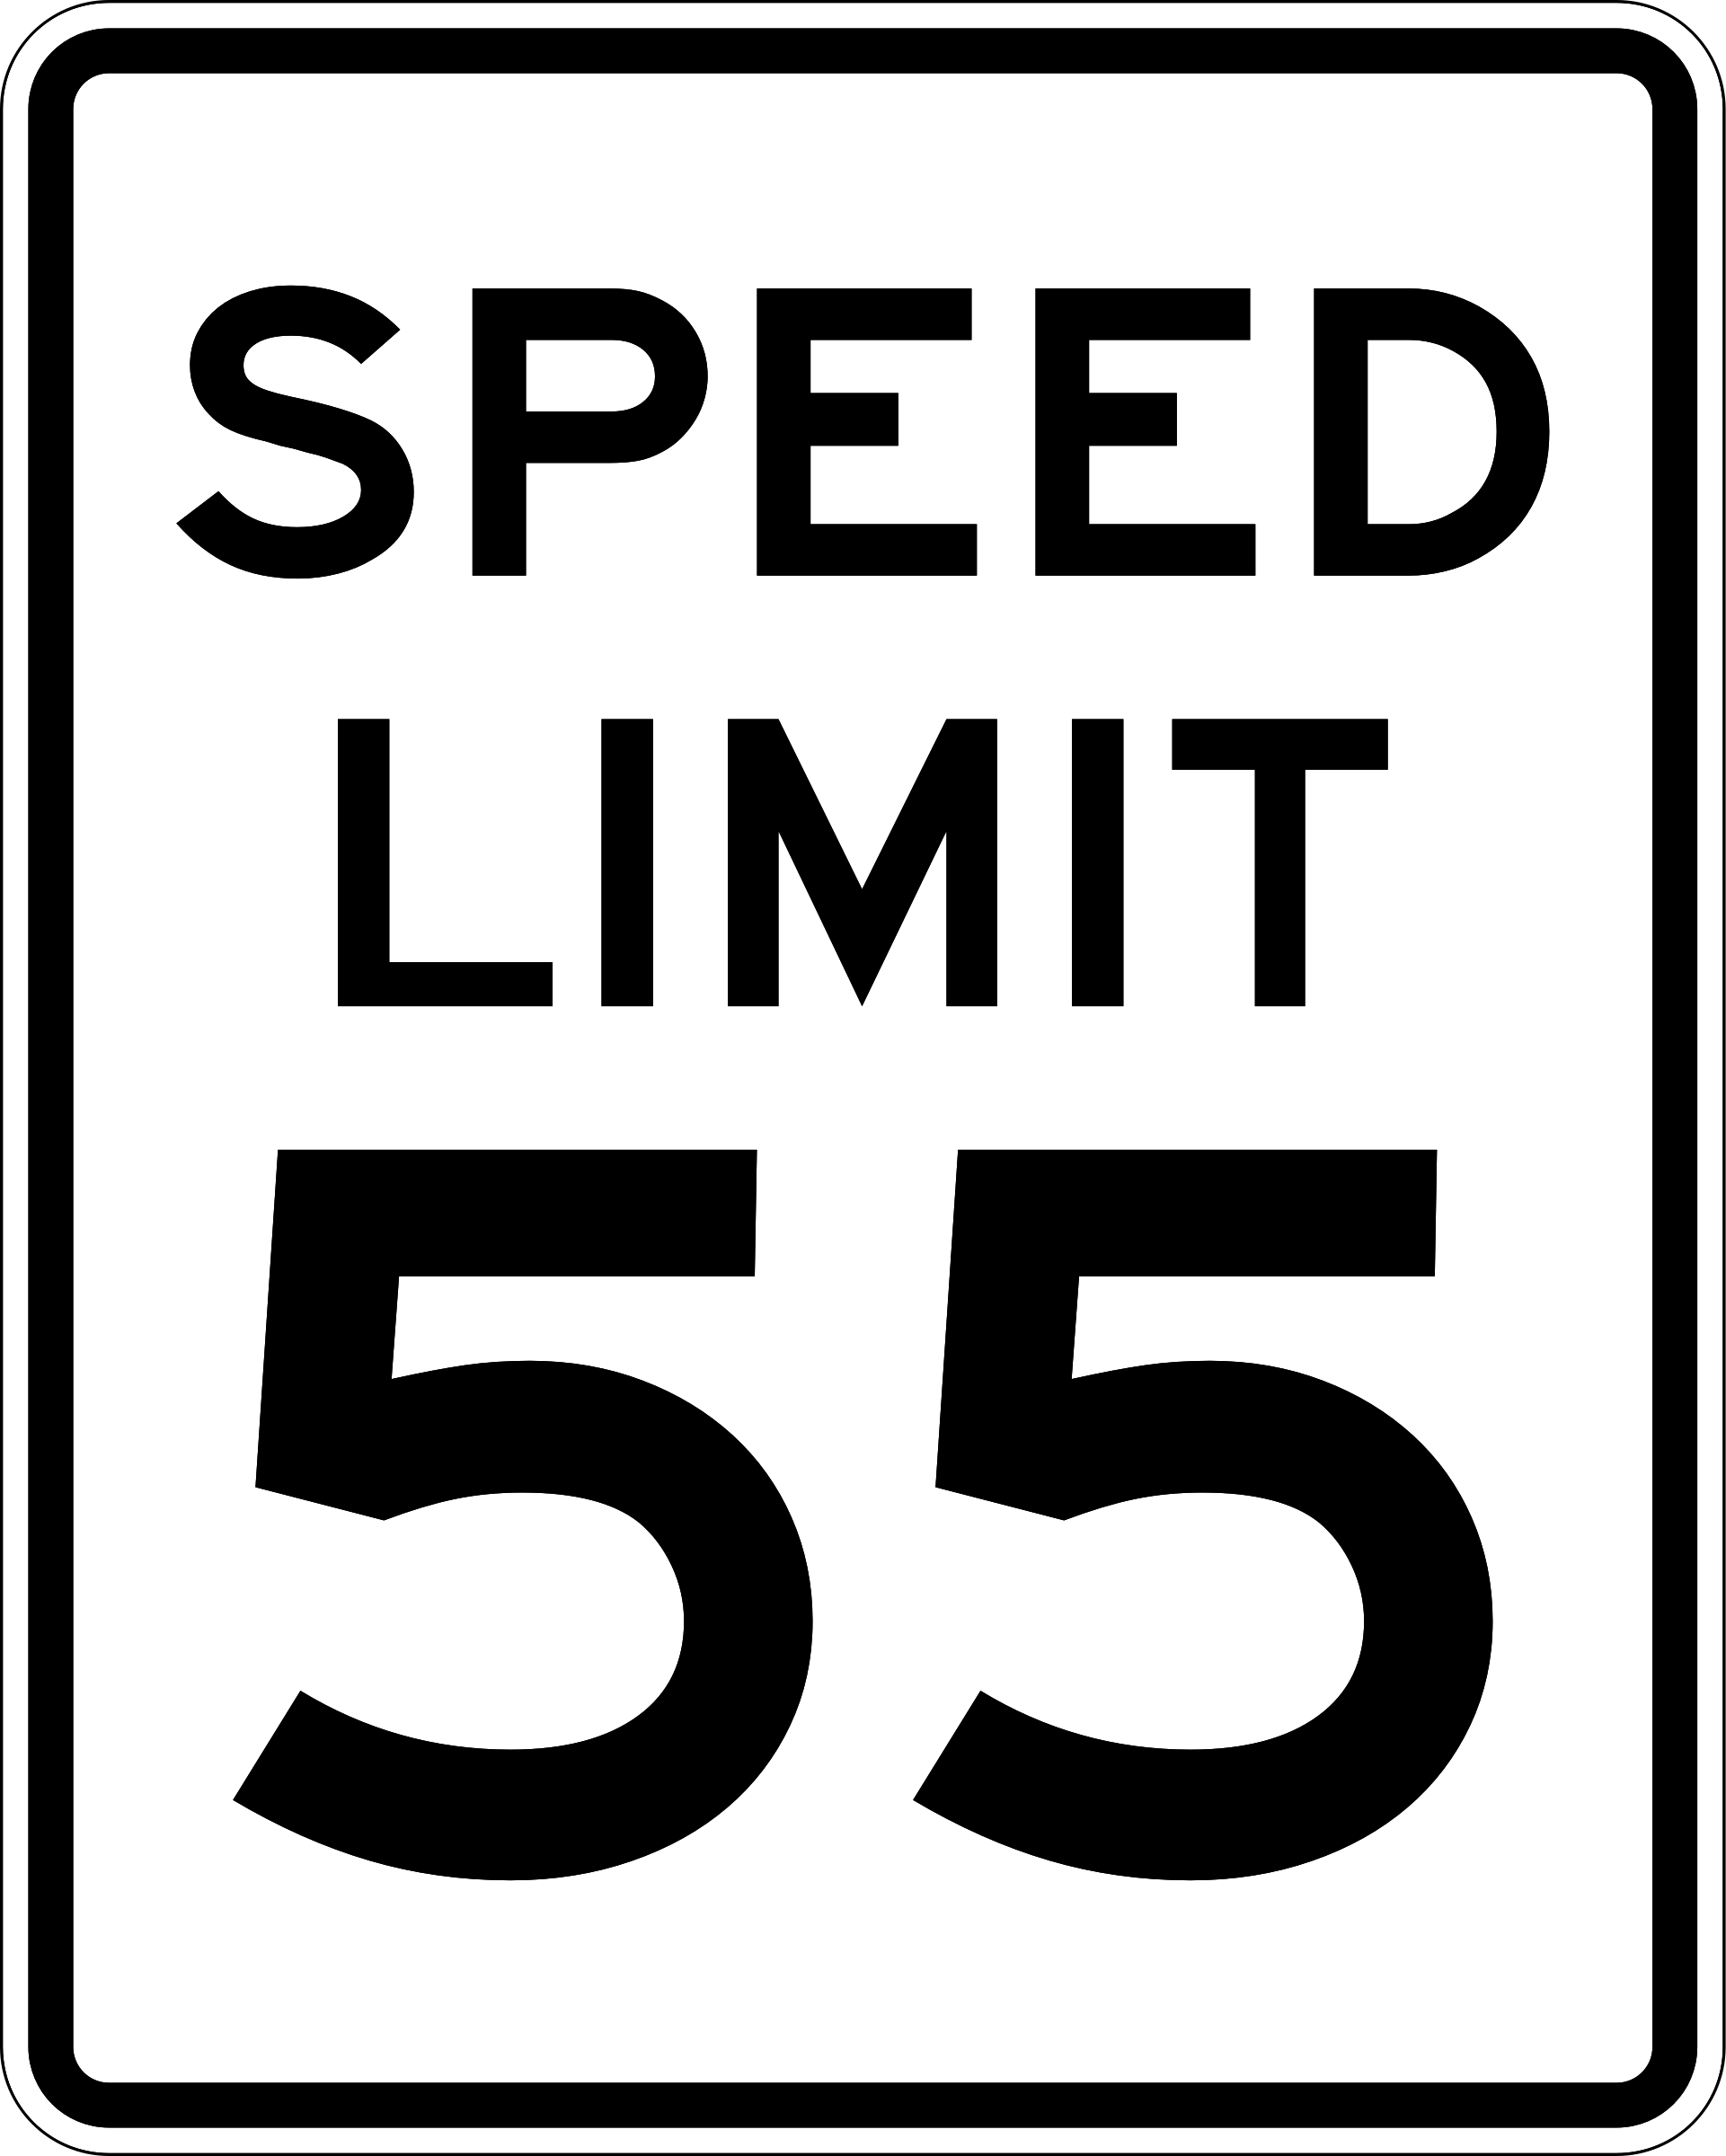 Clipart - Speed Limit 55